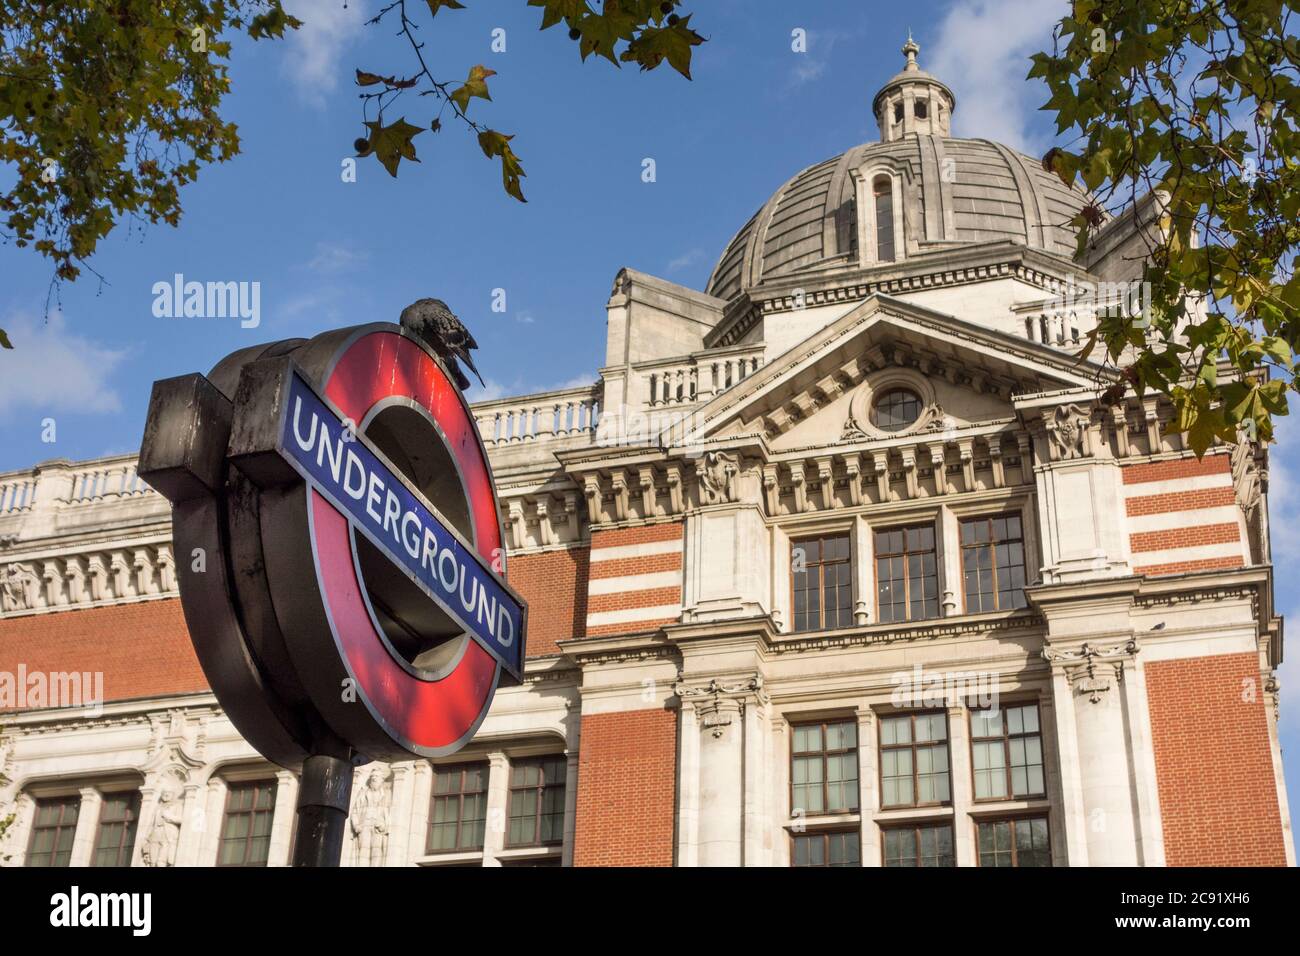 London Underground sign Stock Photo